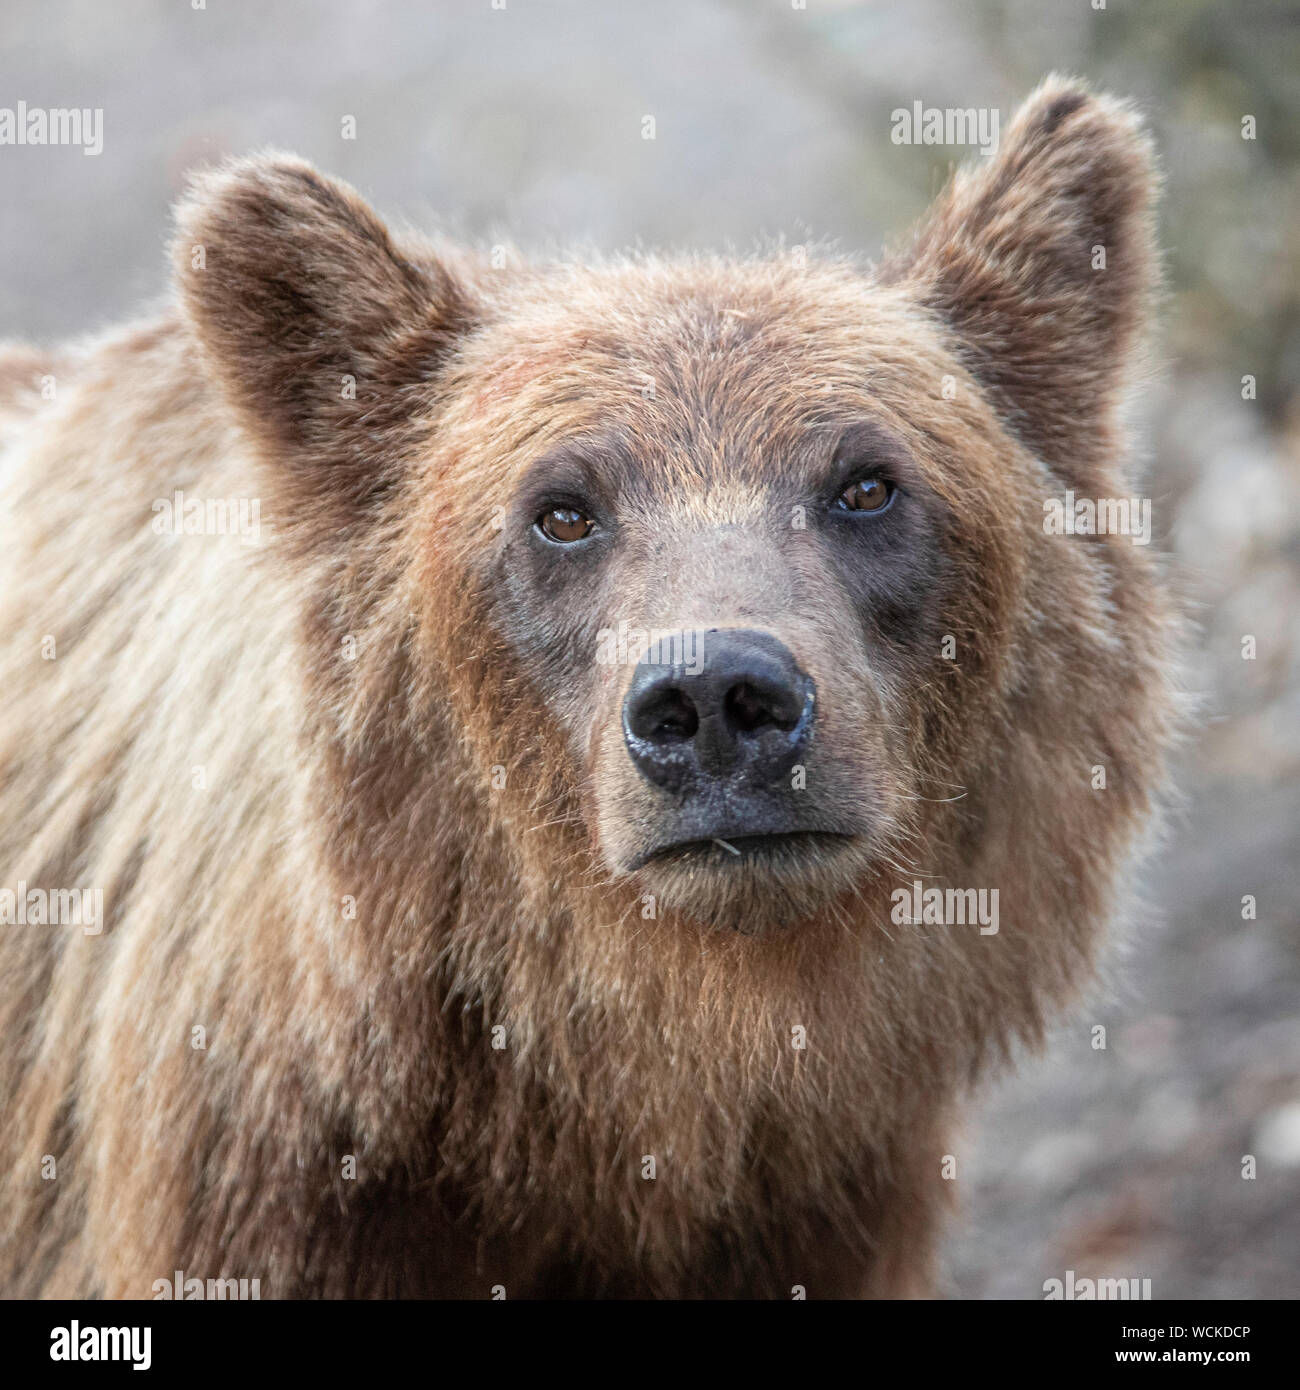 Orso grizzly close-up di testa guardando verso la telecamera, Ursus arctos horribilis, orso bruno, Nord America, Canada, Foto Stock